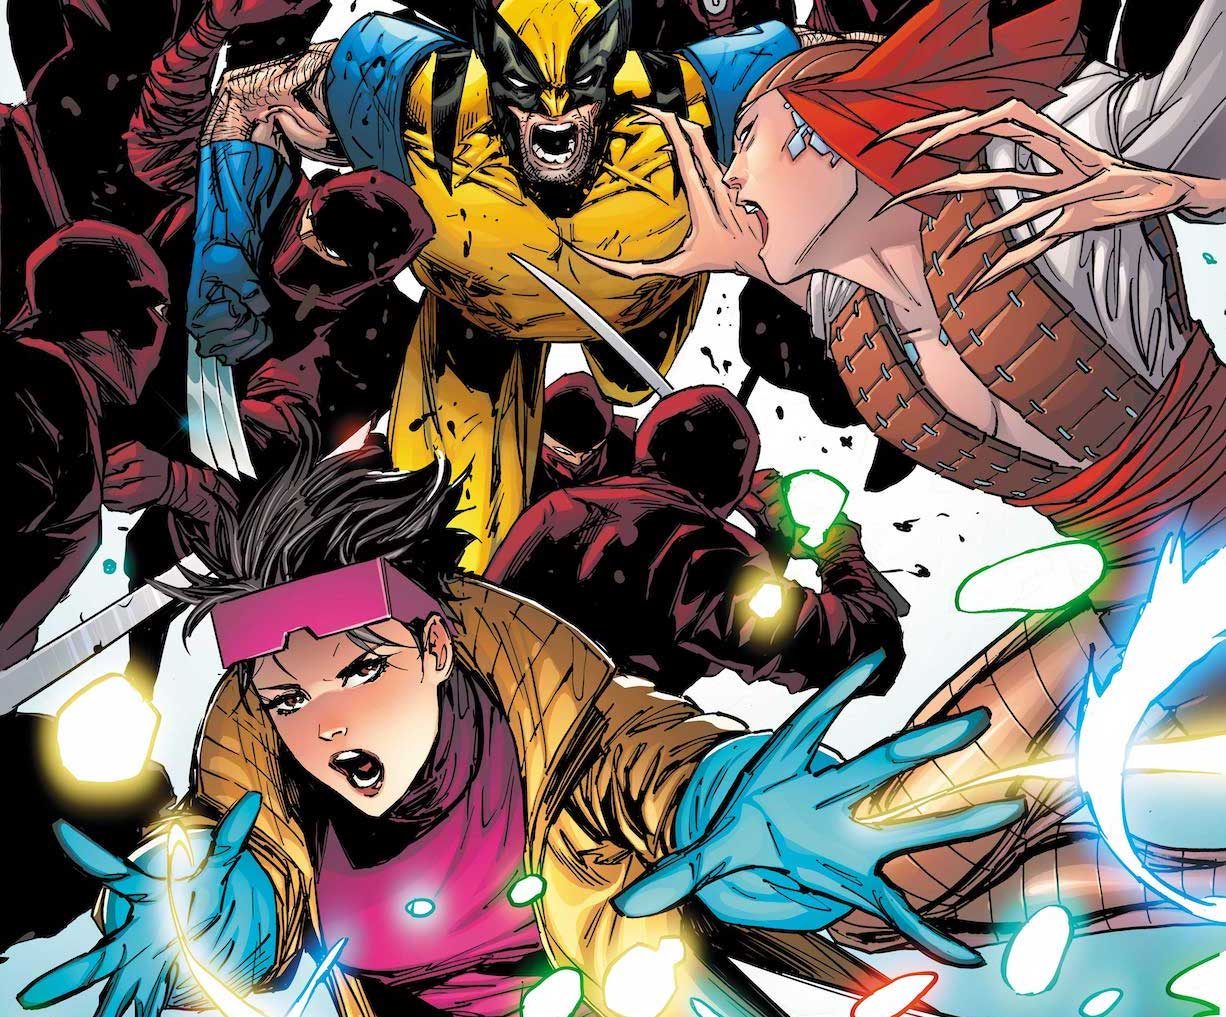 'X-Men Legends' #7 is a just-okay X-Men experience